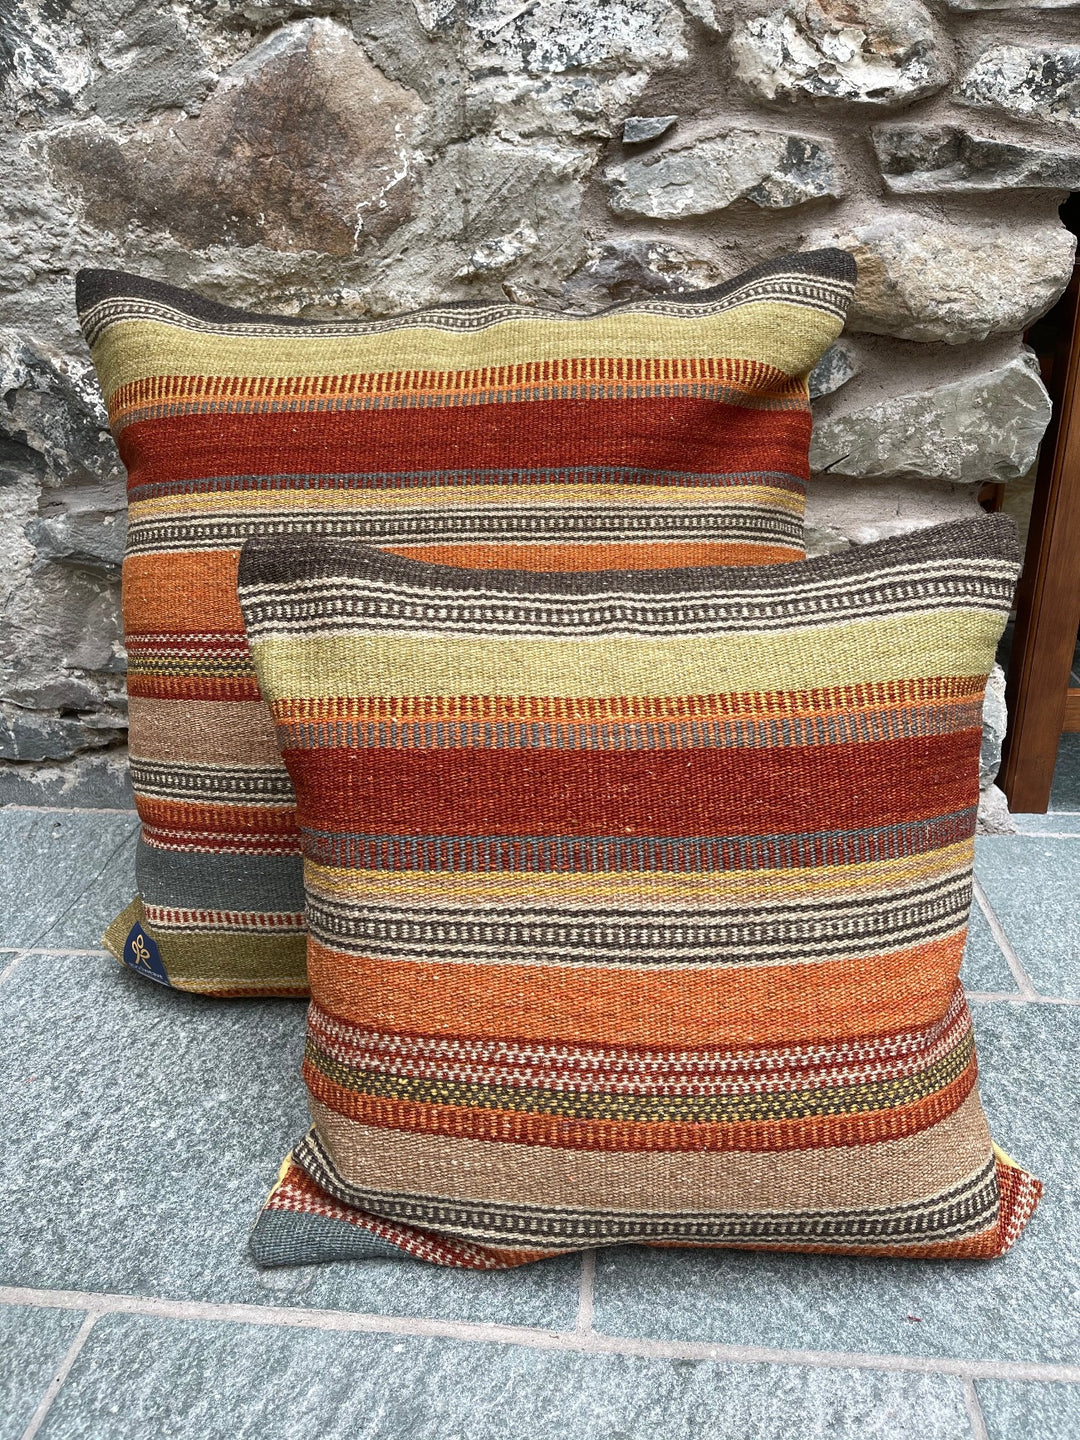 Ooty Cushion Cover Kilim Design in Multi Colour Stripes